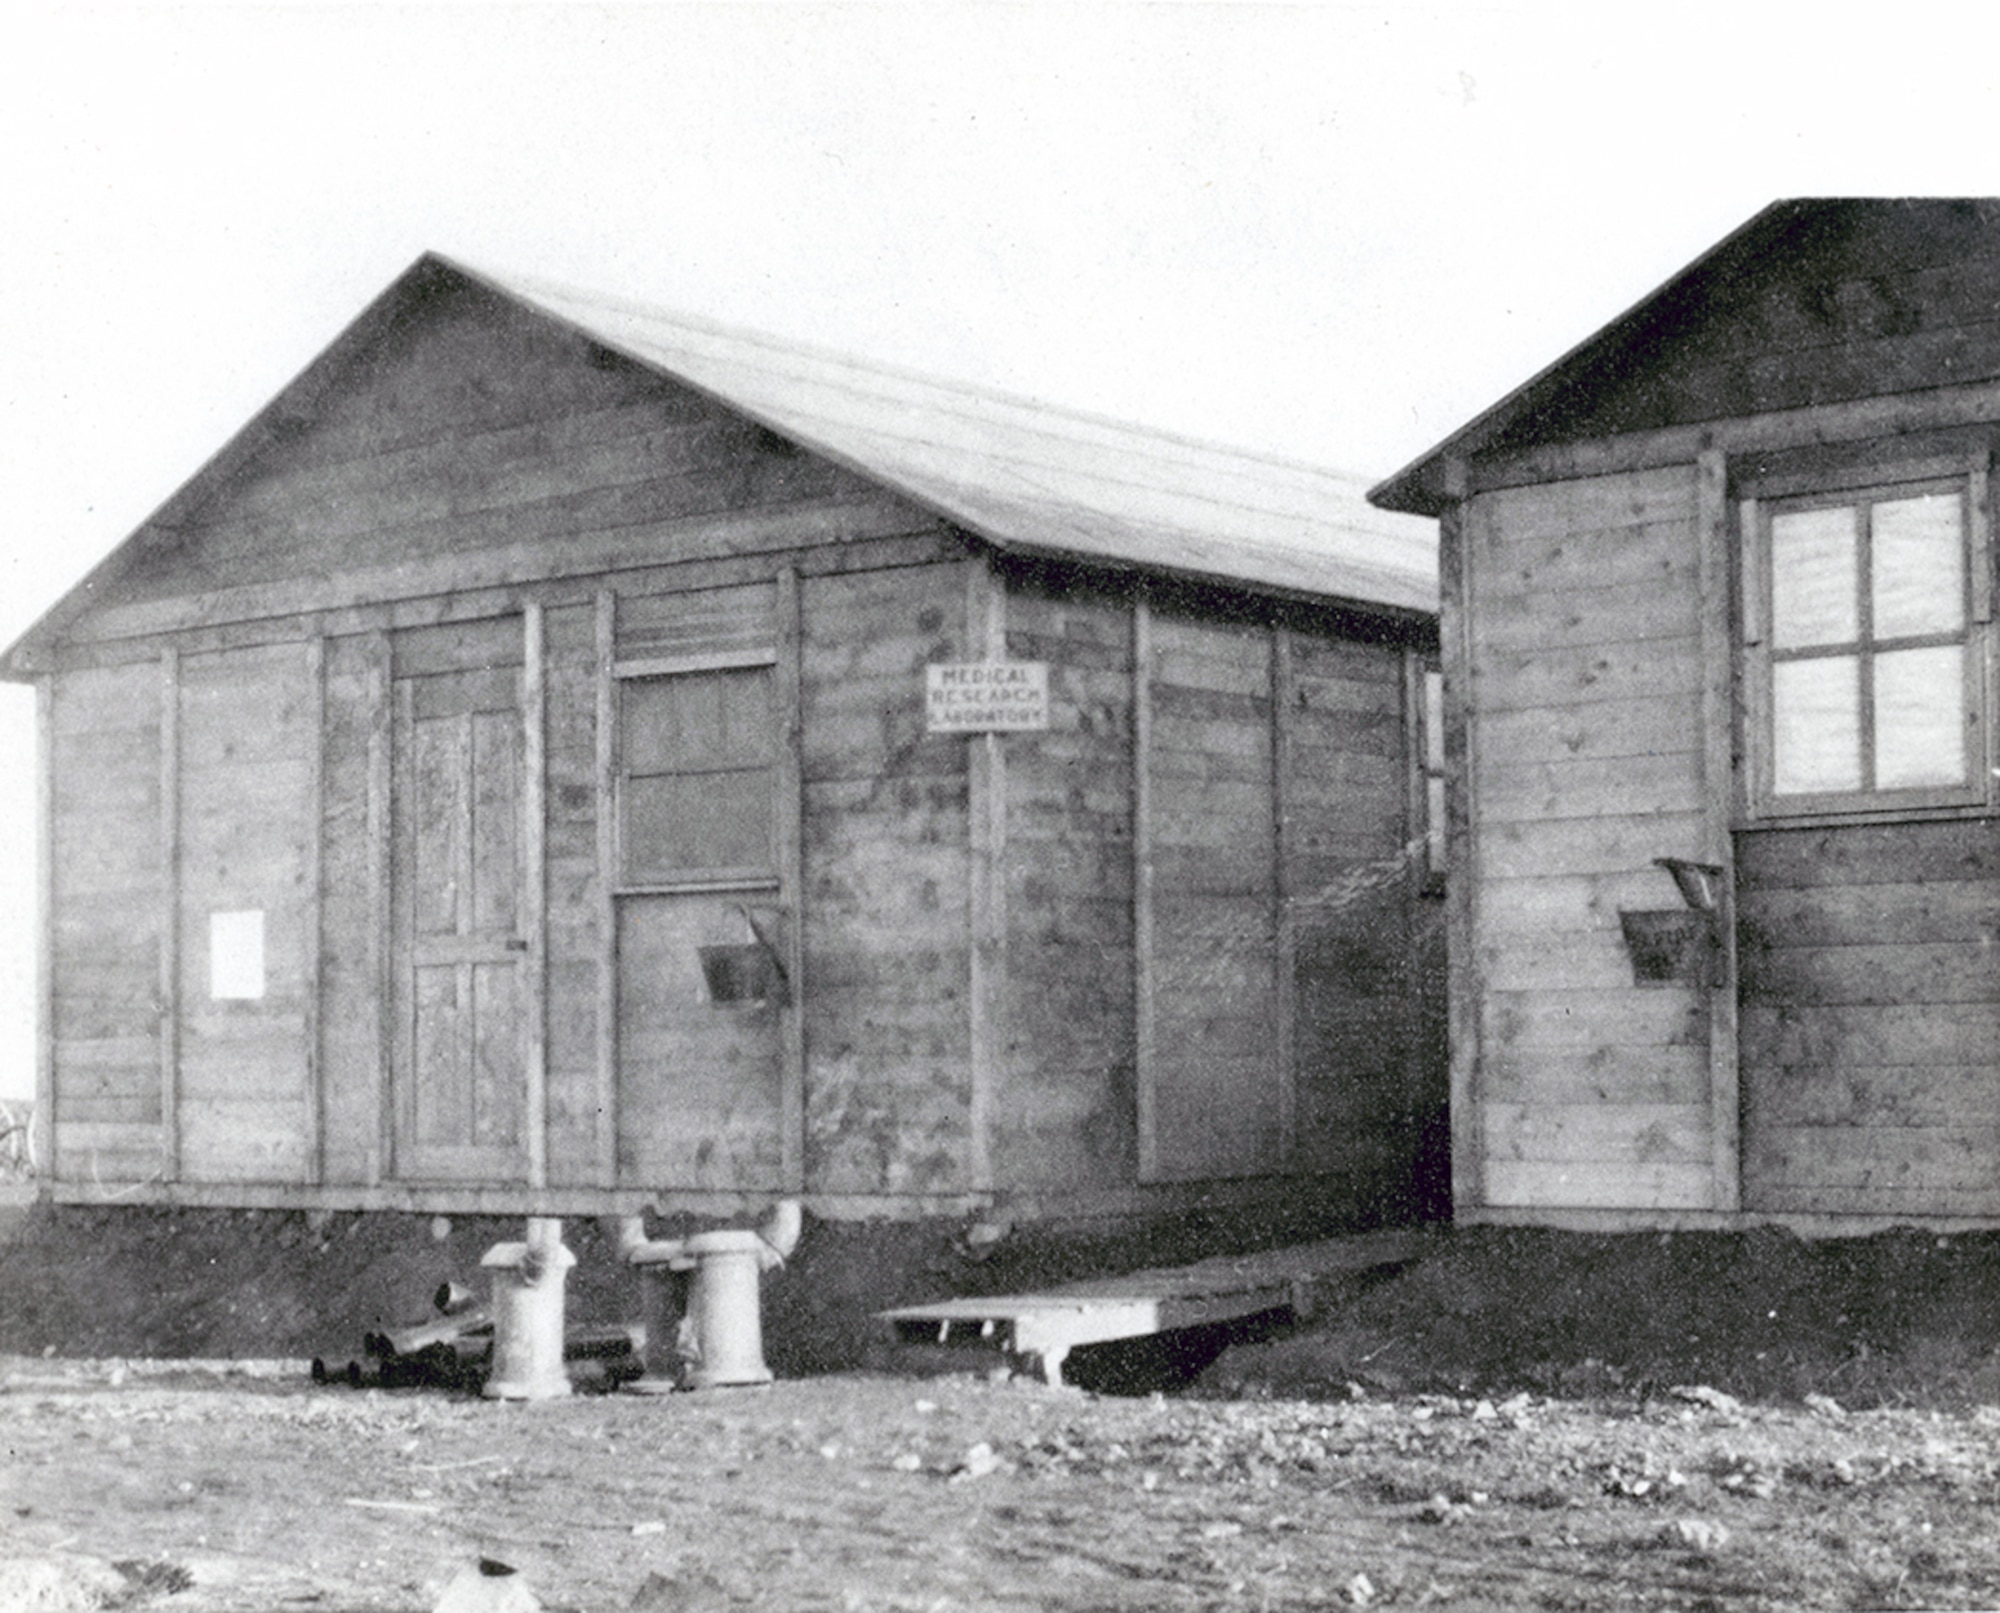 Buildings of the Aero Medical Laboratory at Hazelhurst Field, in Mineola, New York in 1918.